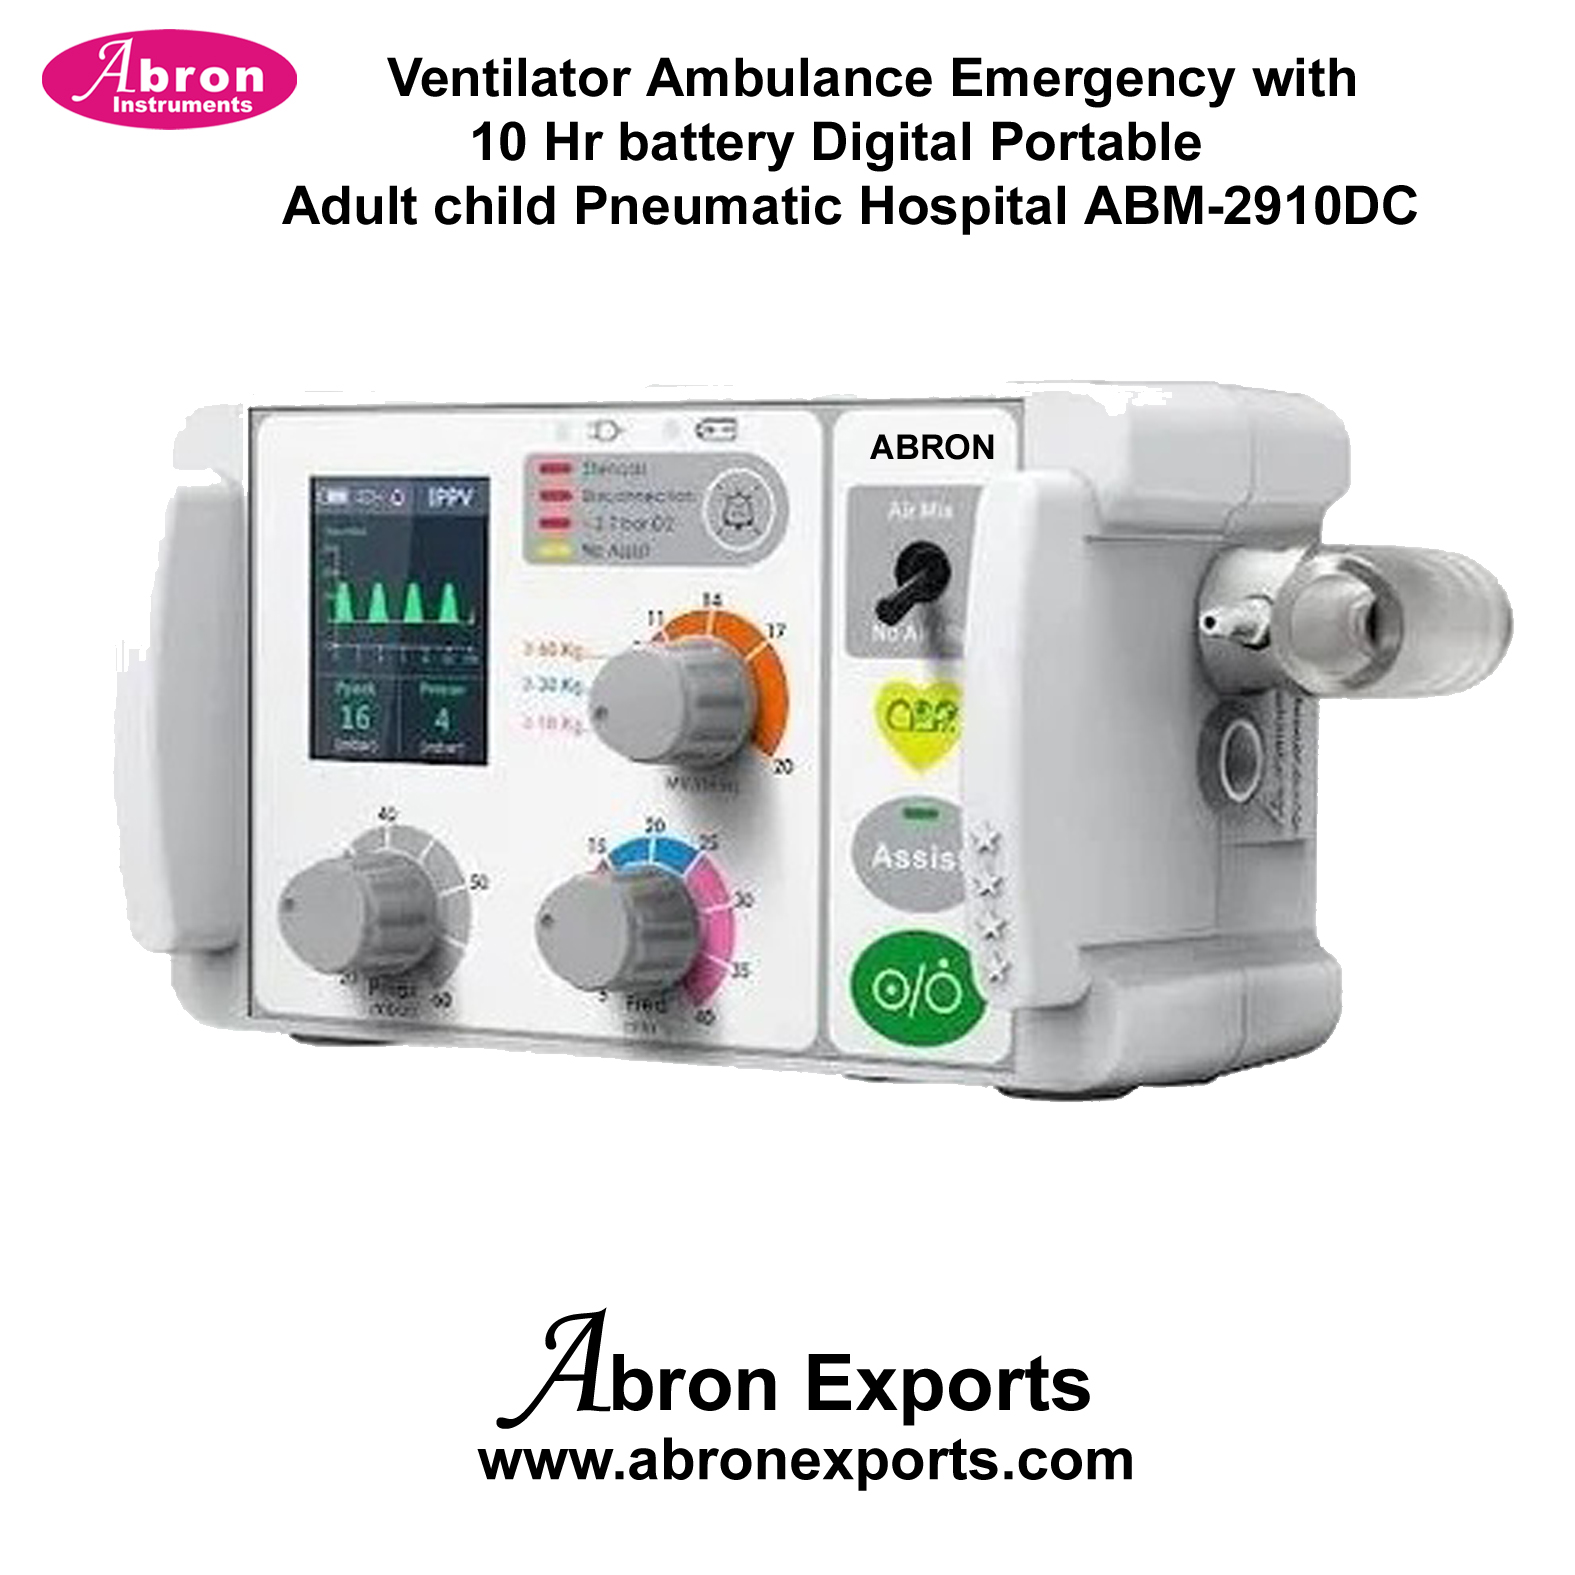 Ventilator Ambulance Emergency with 10 Hr Battery Digital Portable Adult Child Pneumatic Hospital ABM-2910DC